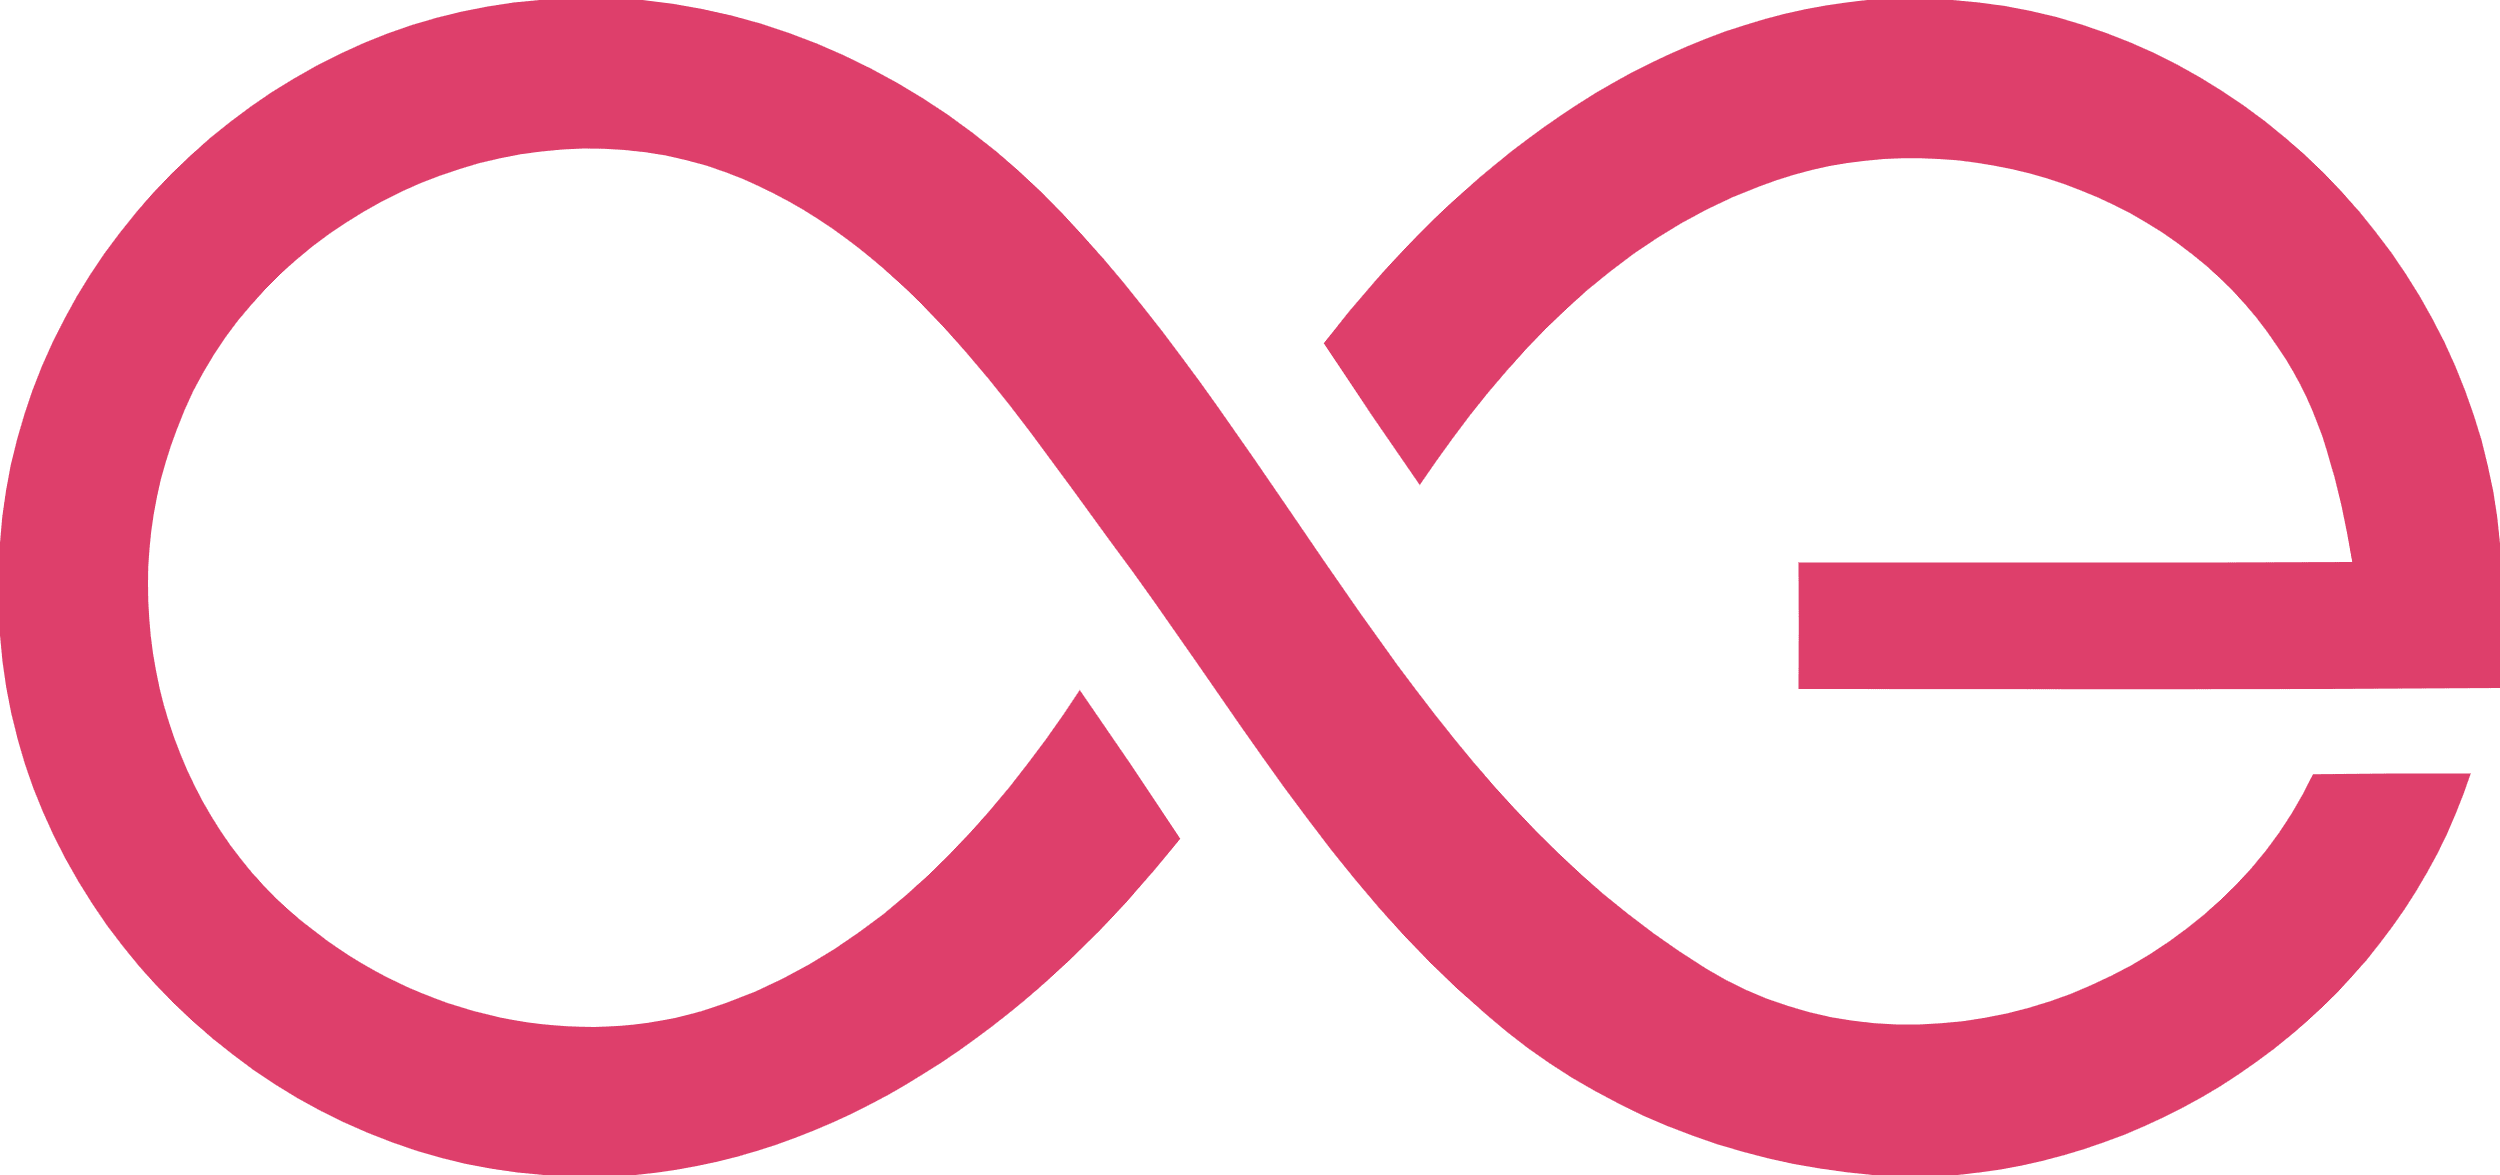 Aeternity logo in svg format